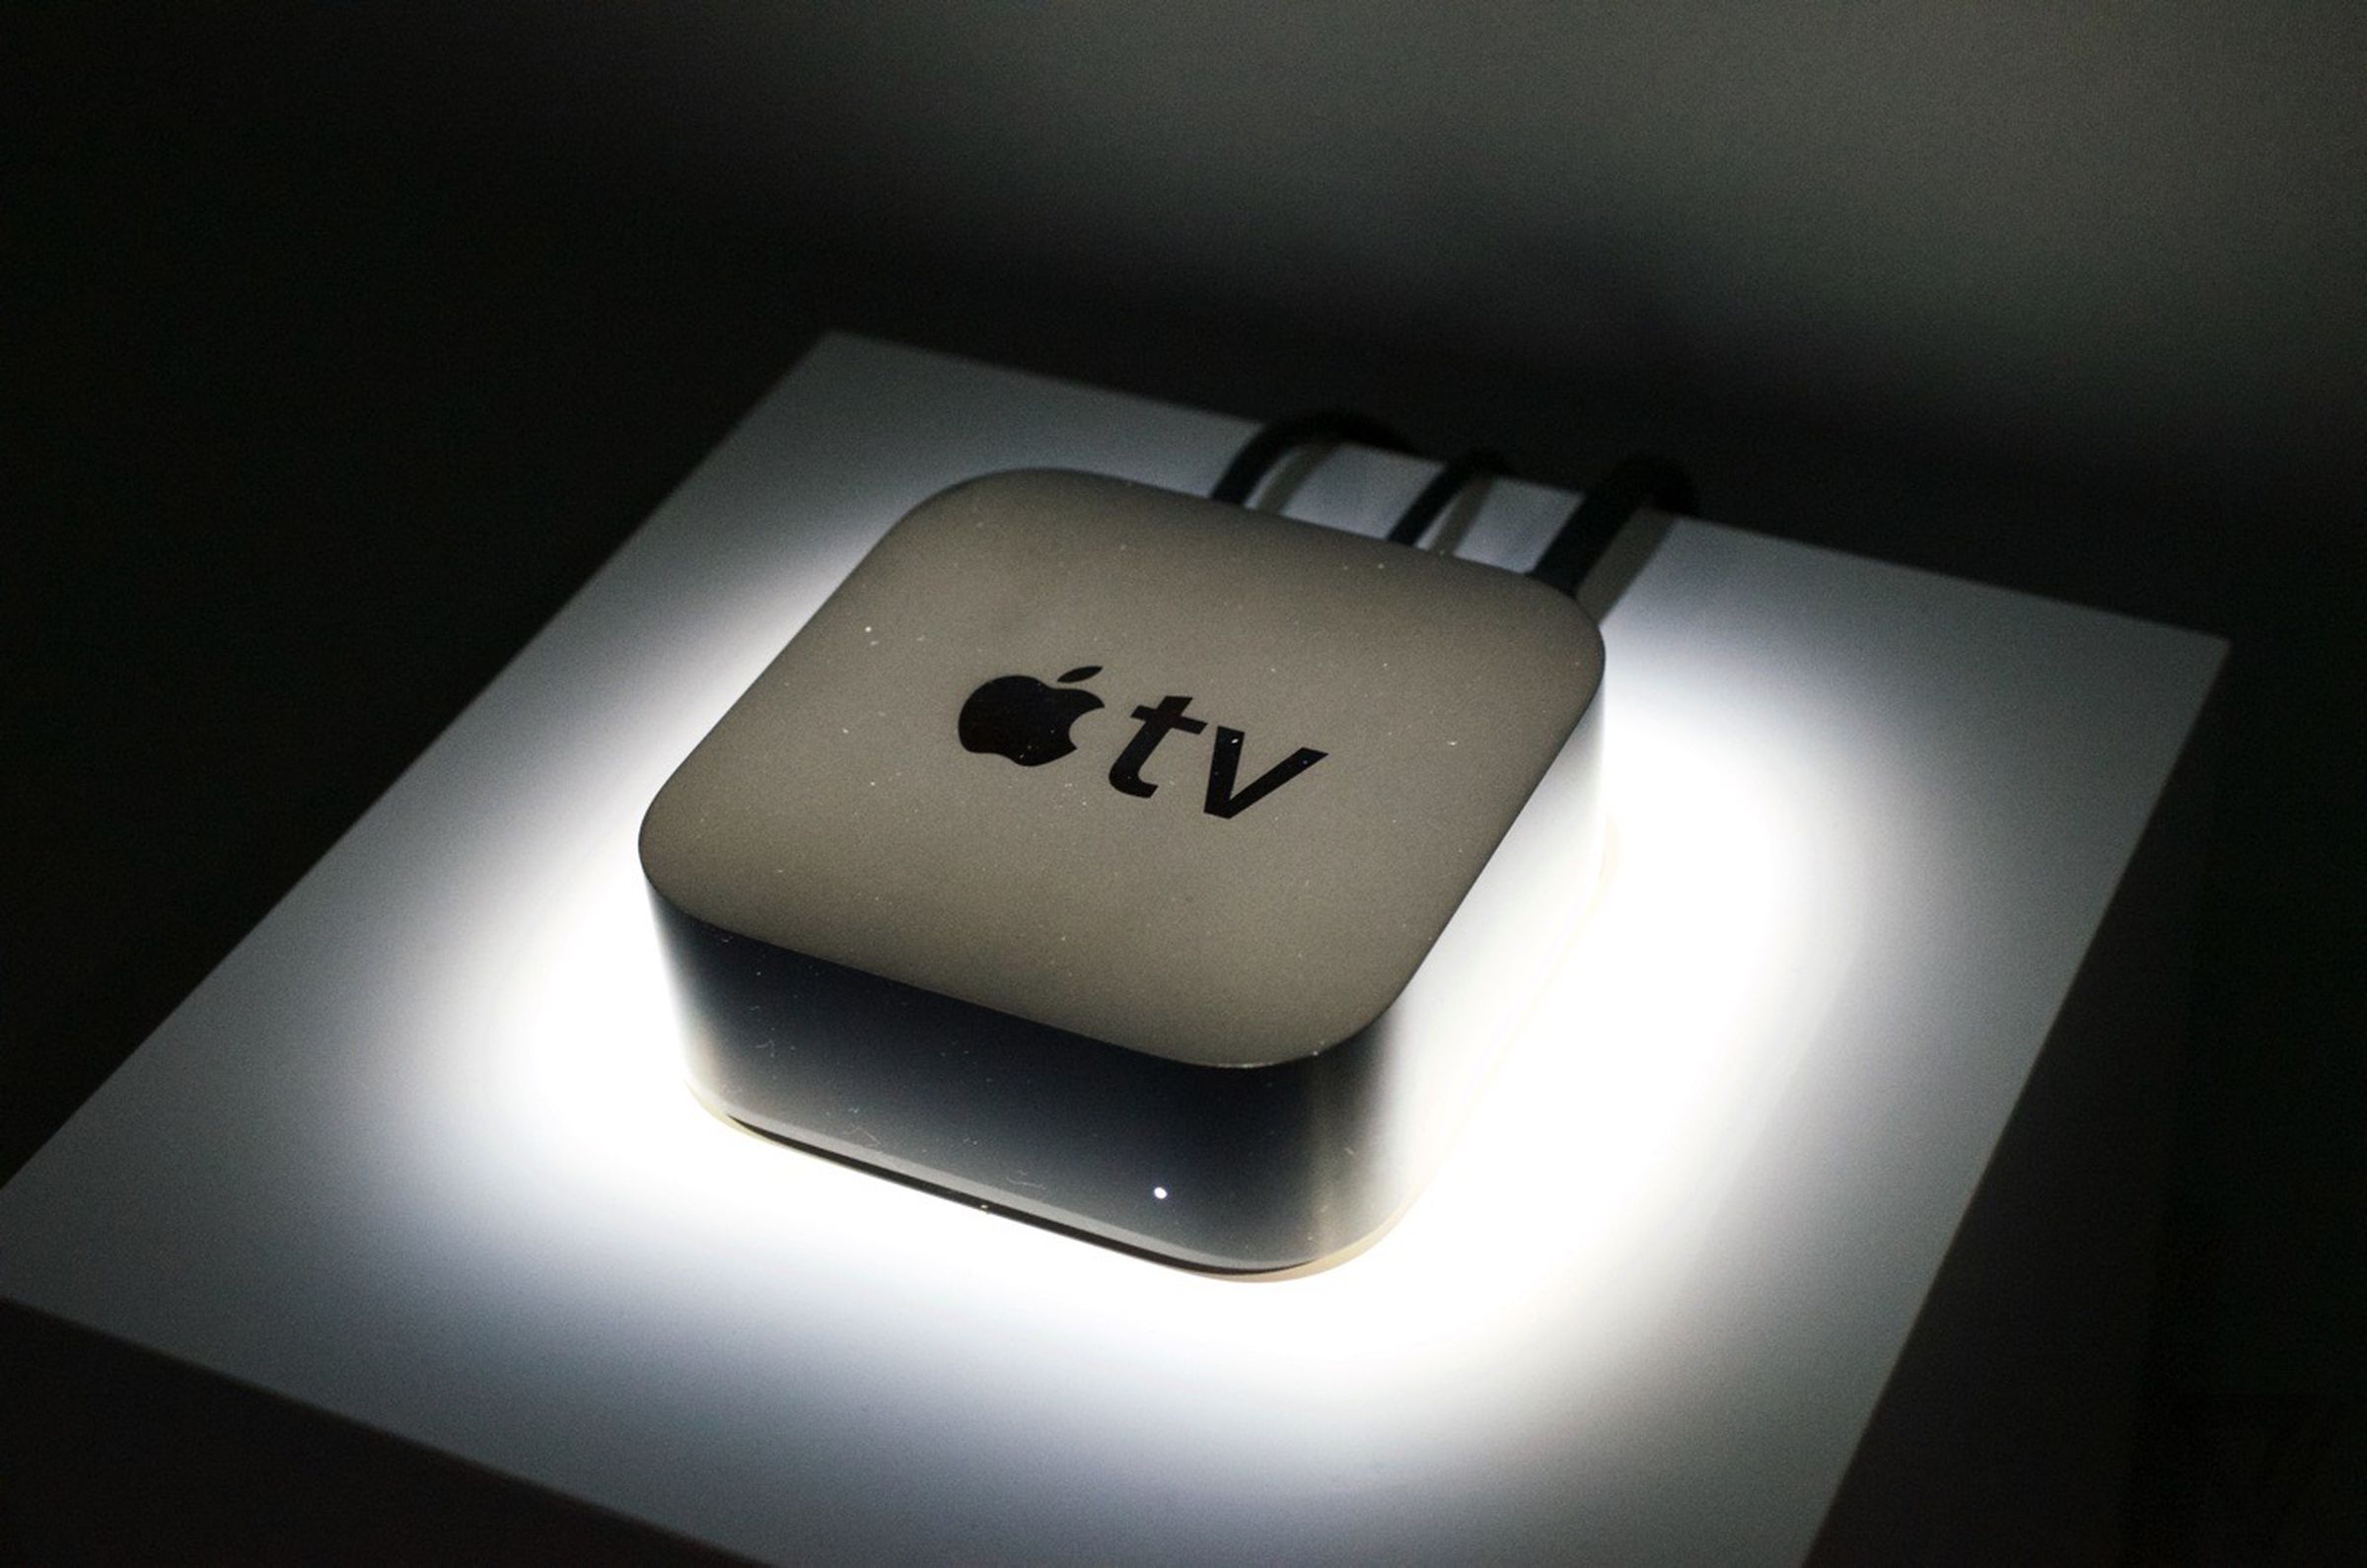 Apple TV hands-on photos